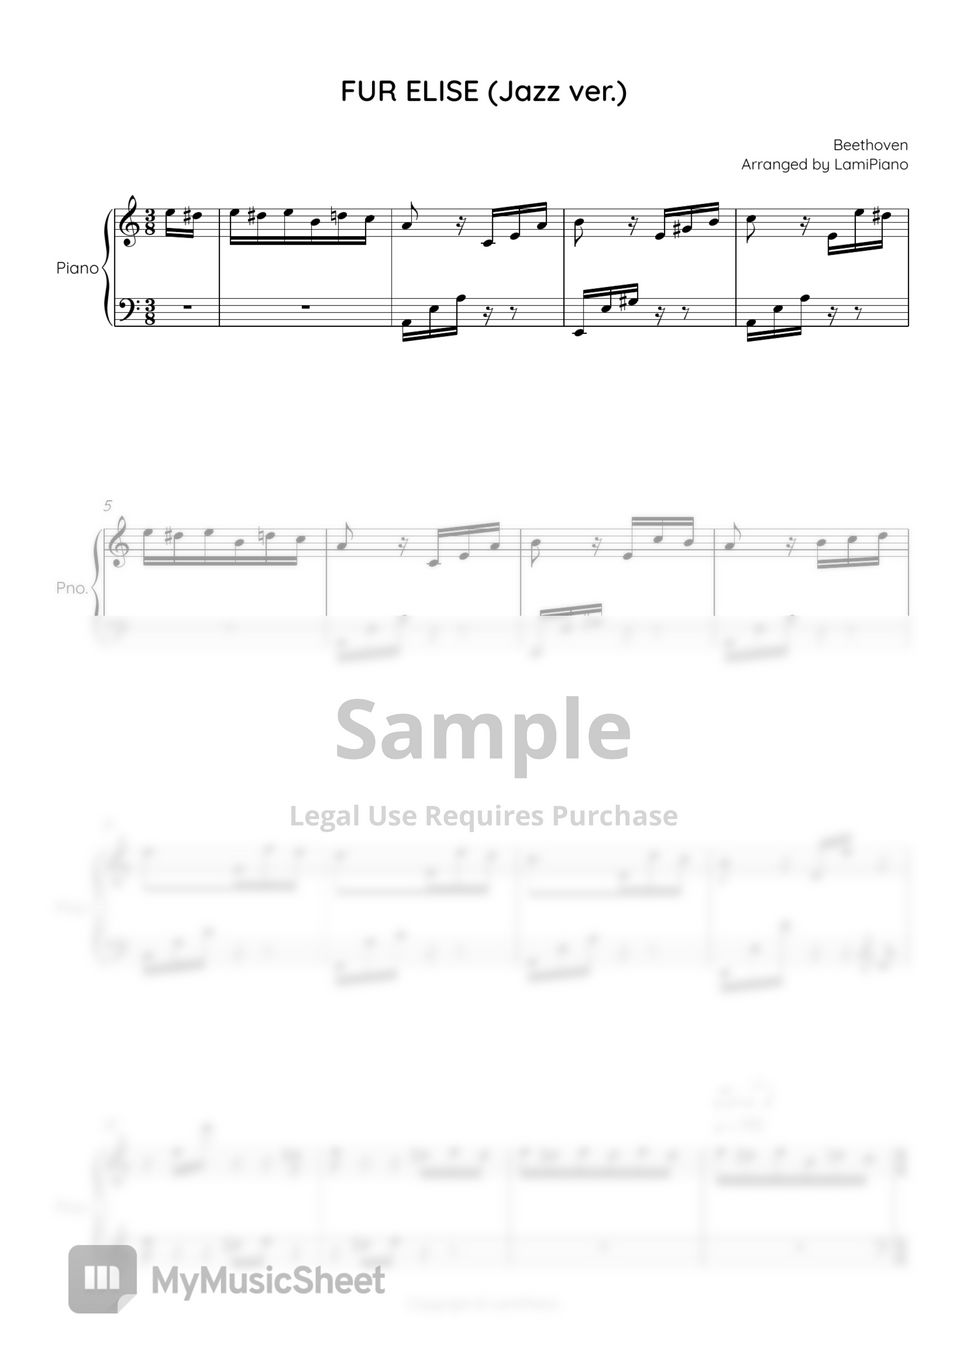 Beethoven - Für Elise (Jazz ver./variation) by LamiPiano